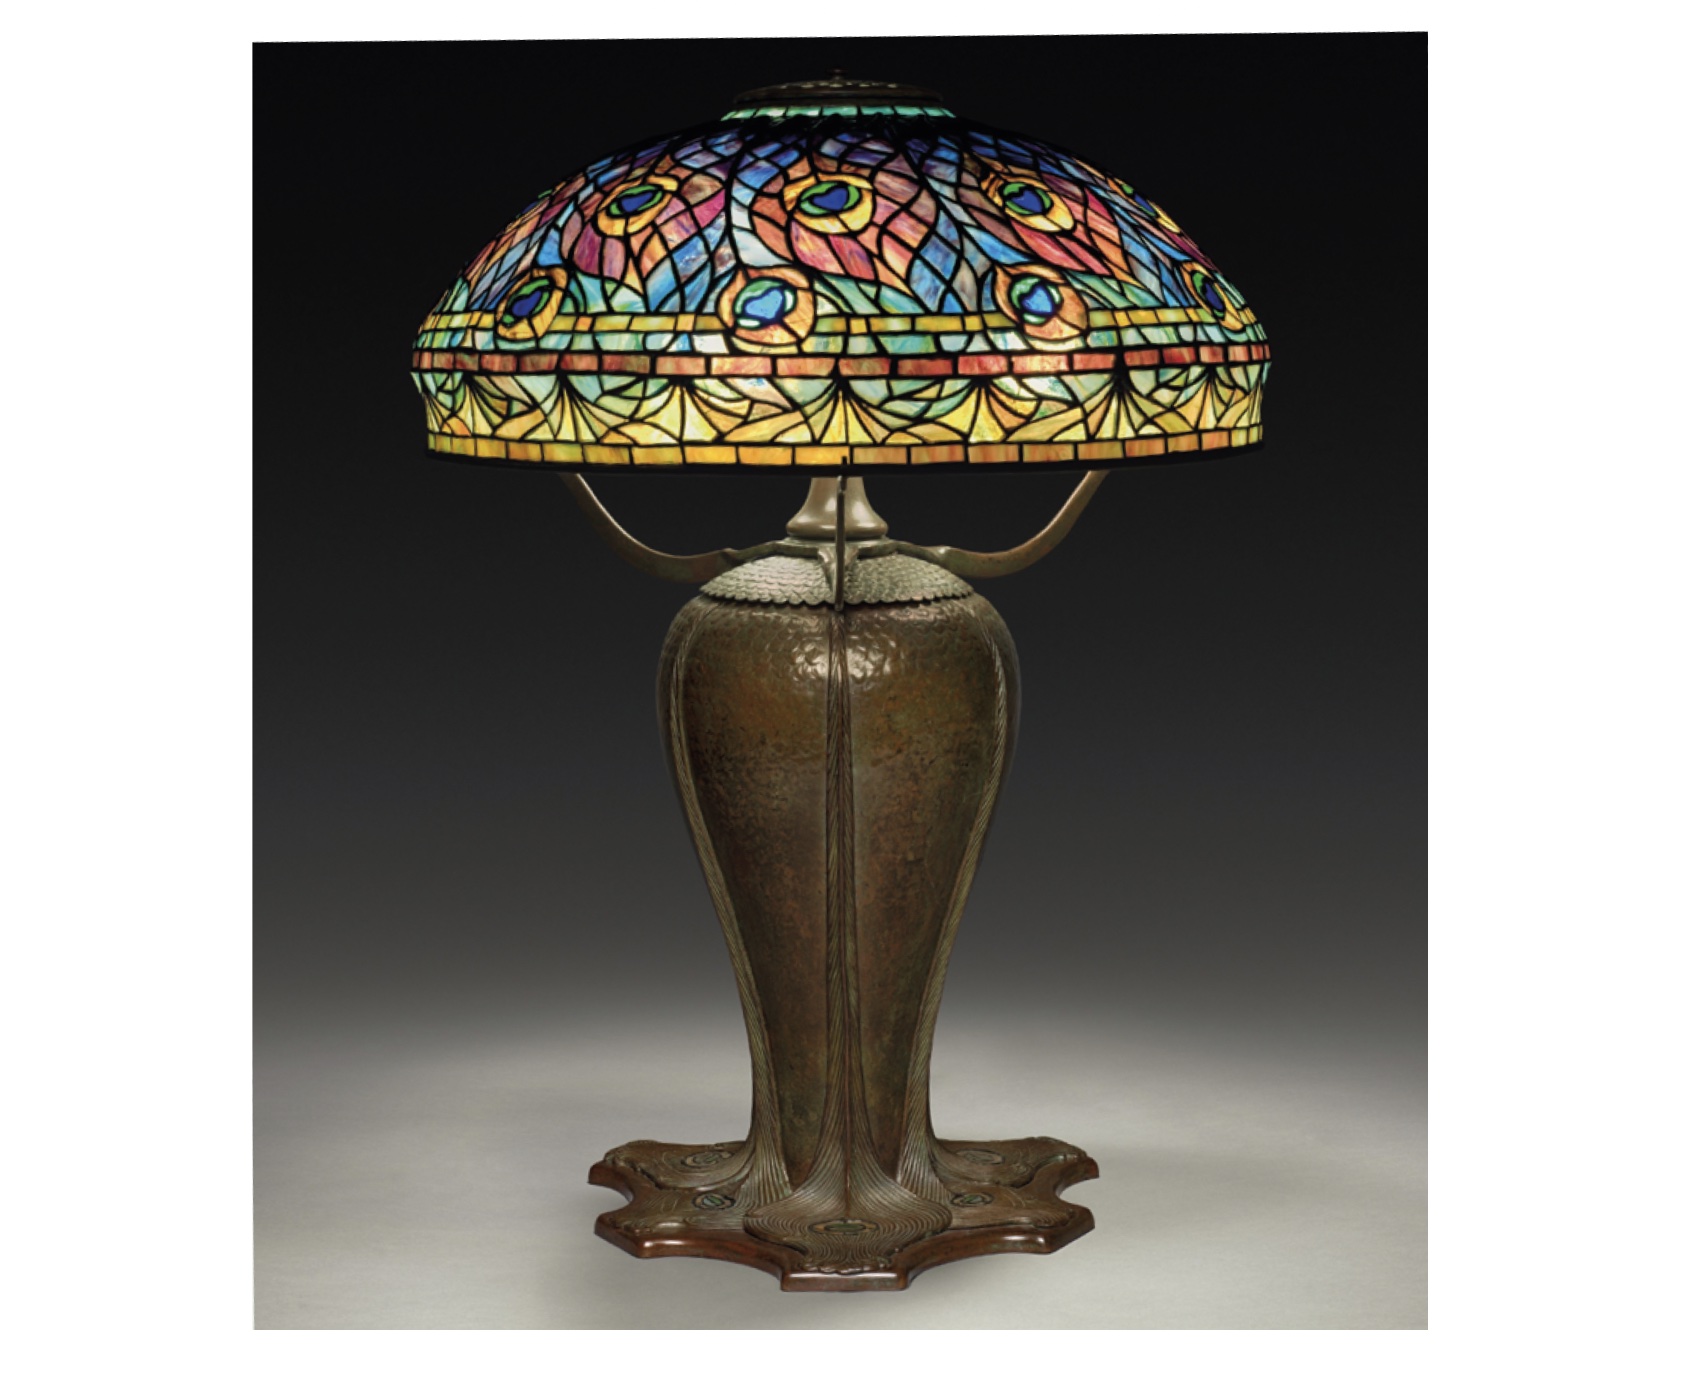 Peacock table lamp, c. 1902, designed by Clara Driscoll (1861–1944), maker Tiffany Studios